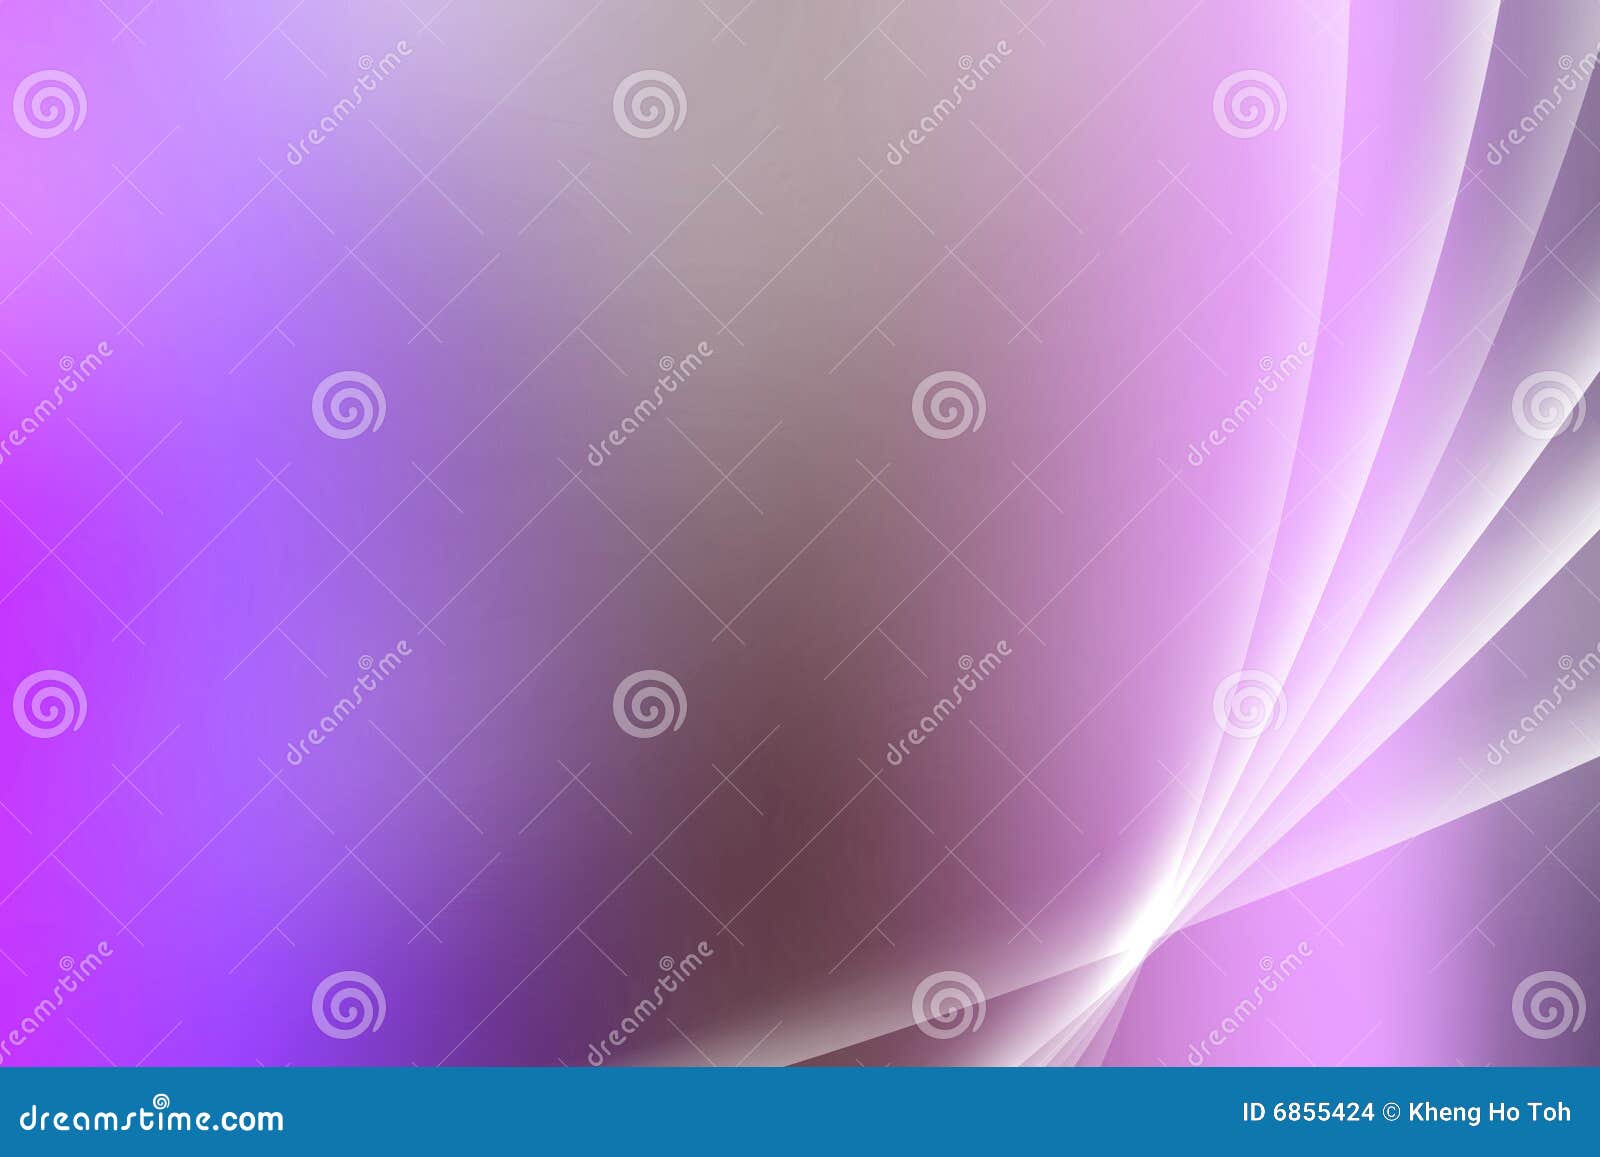 pink purple soothing vista curves